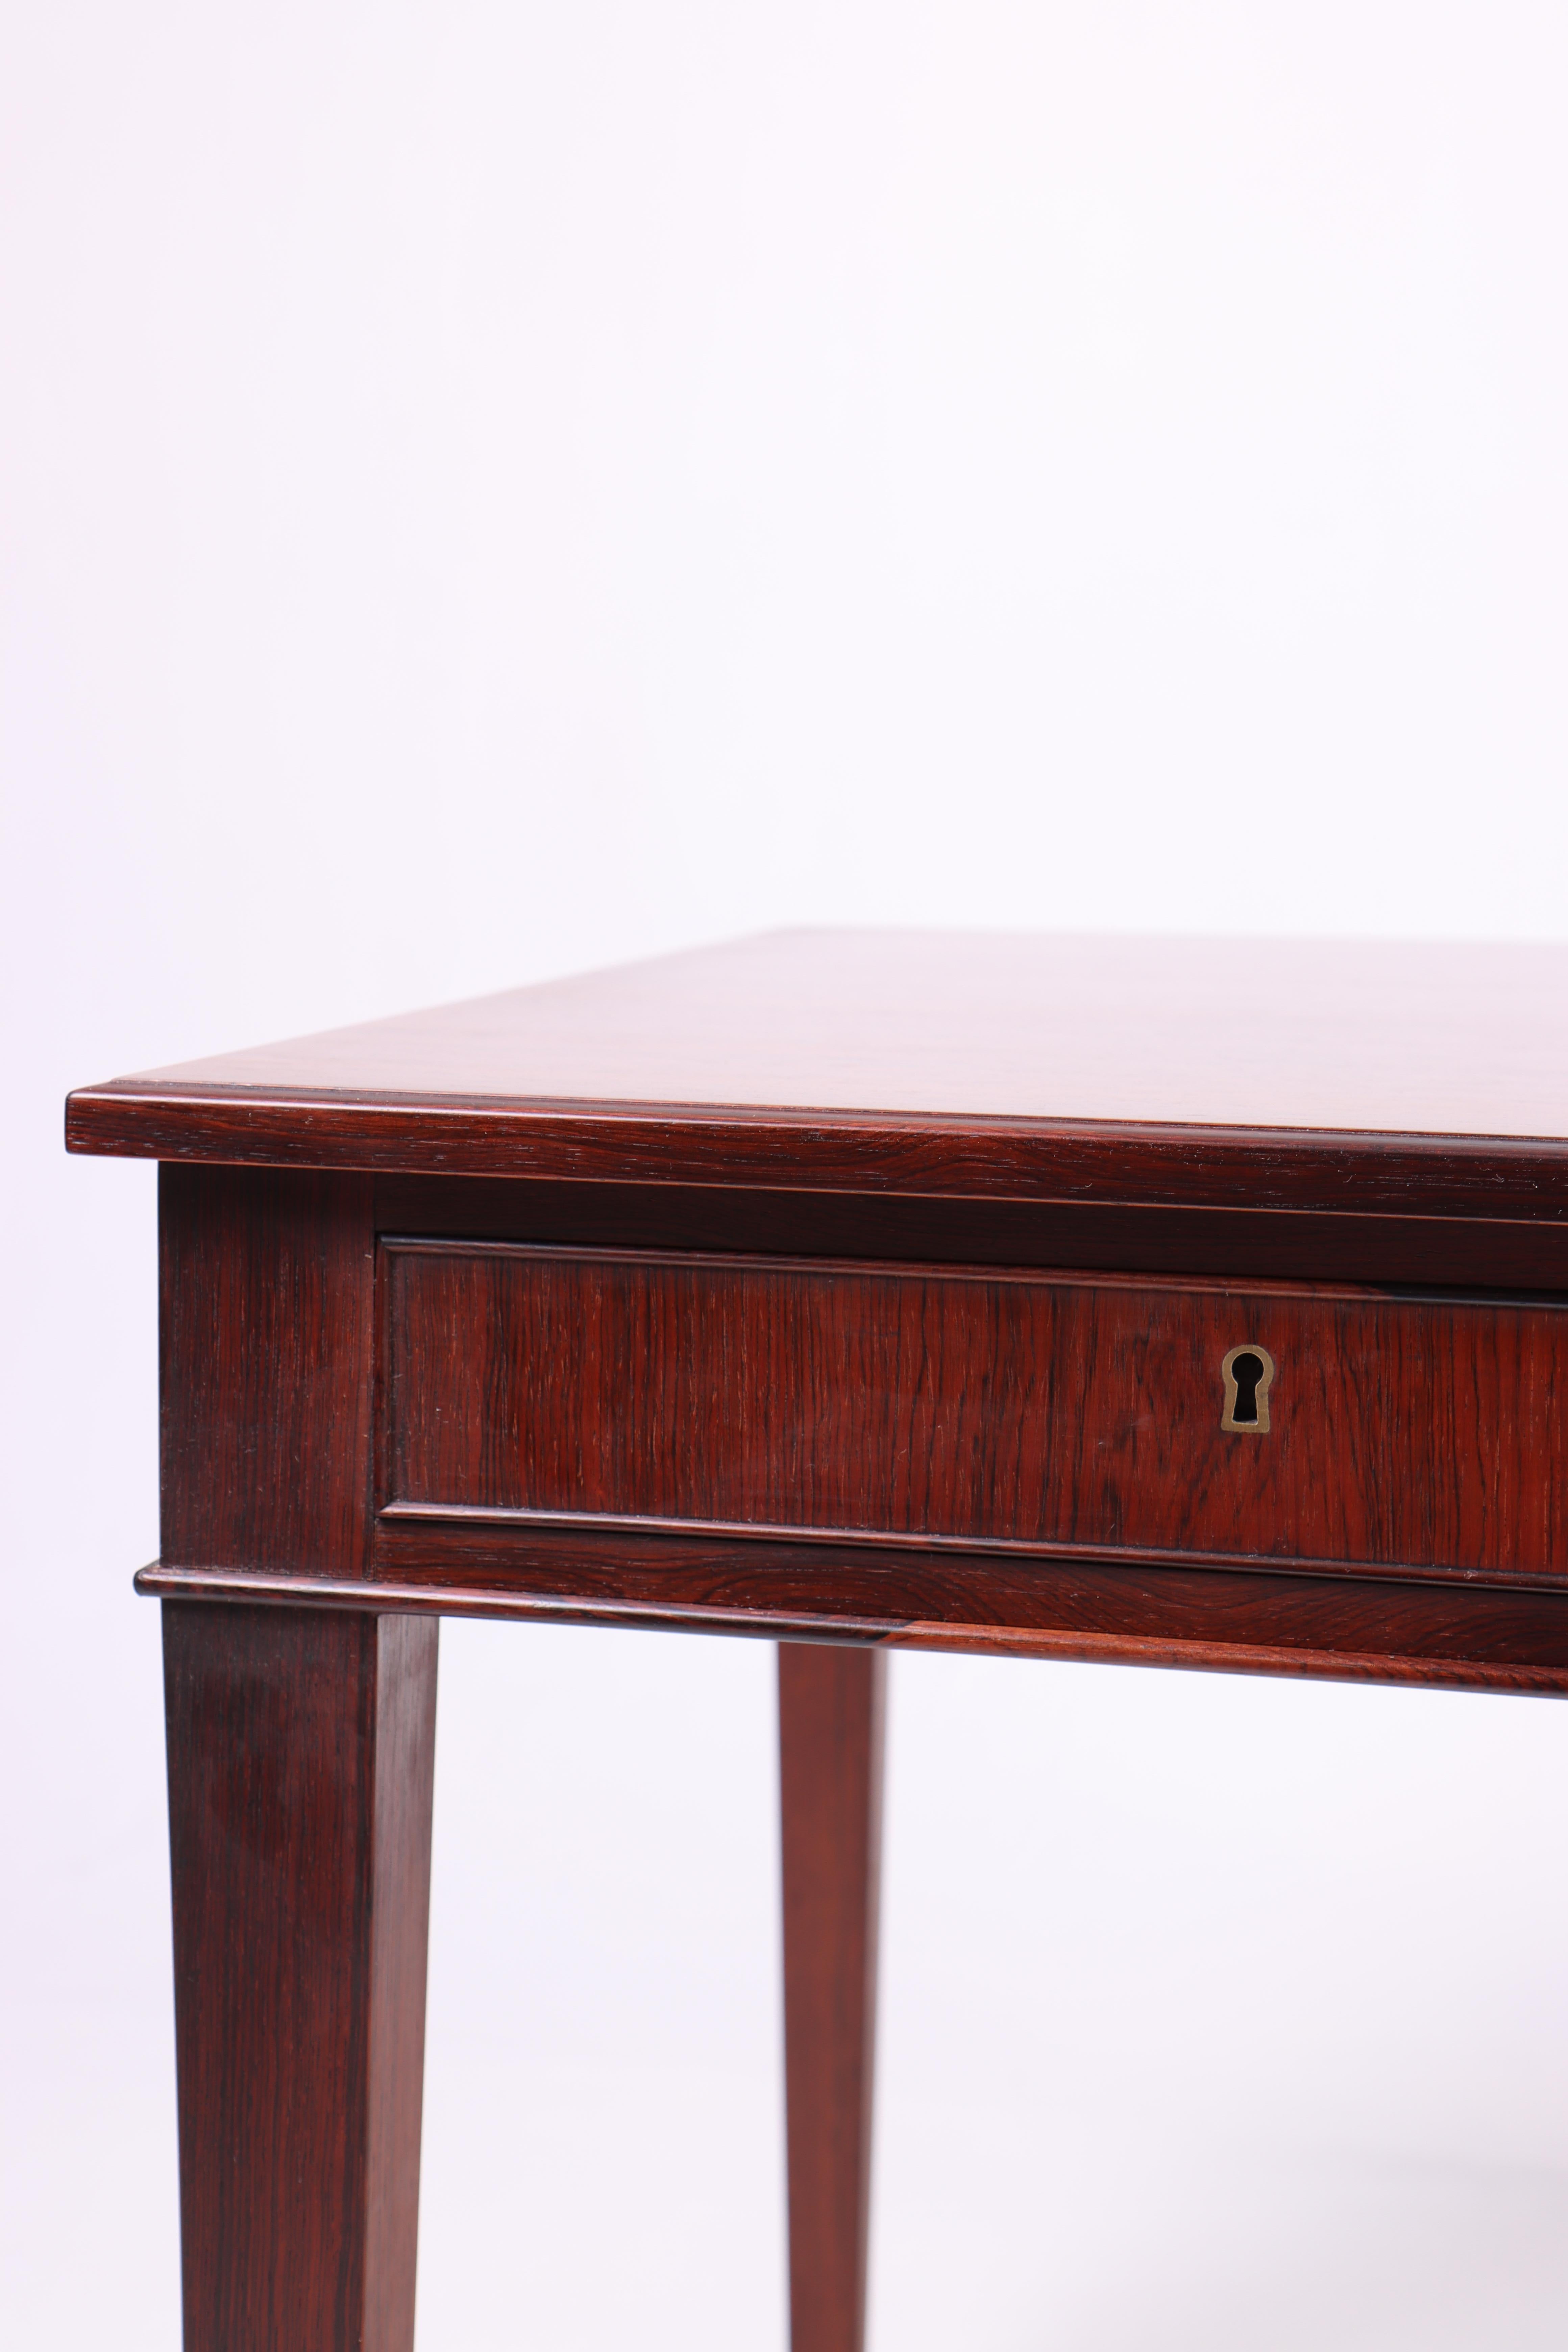 Danish Midcentury Desk in Rosewood Designed by Frits Heningsen, 1950s For Sale